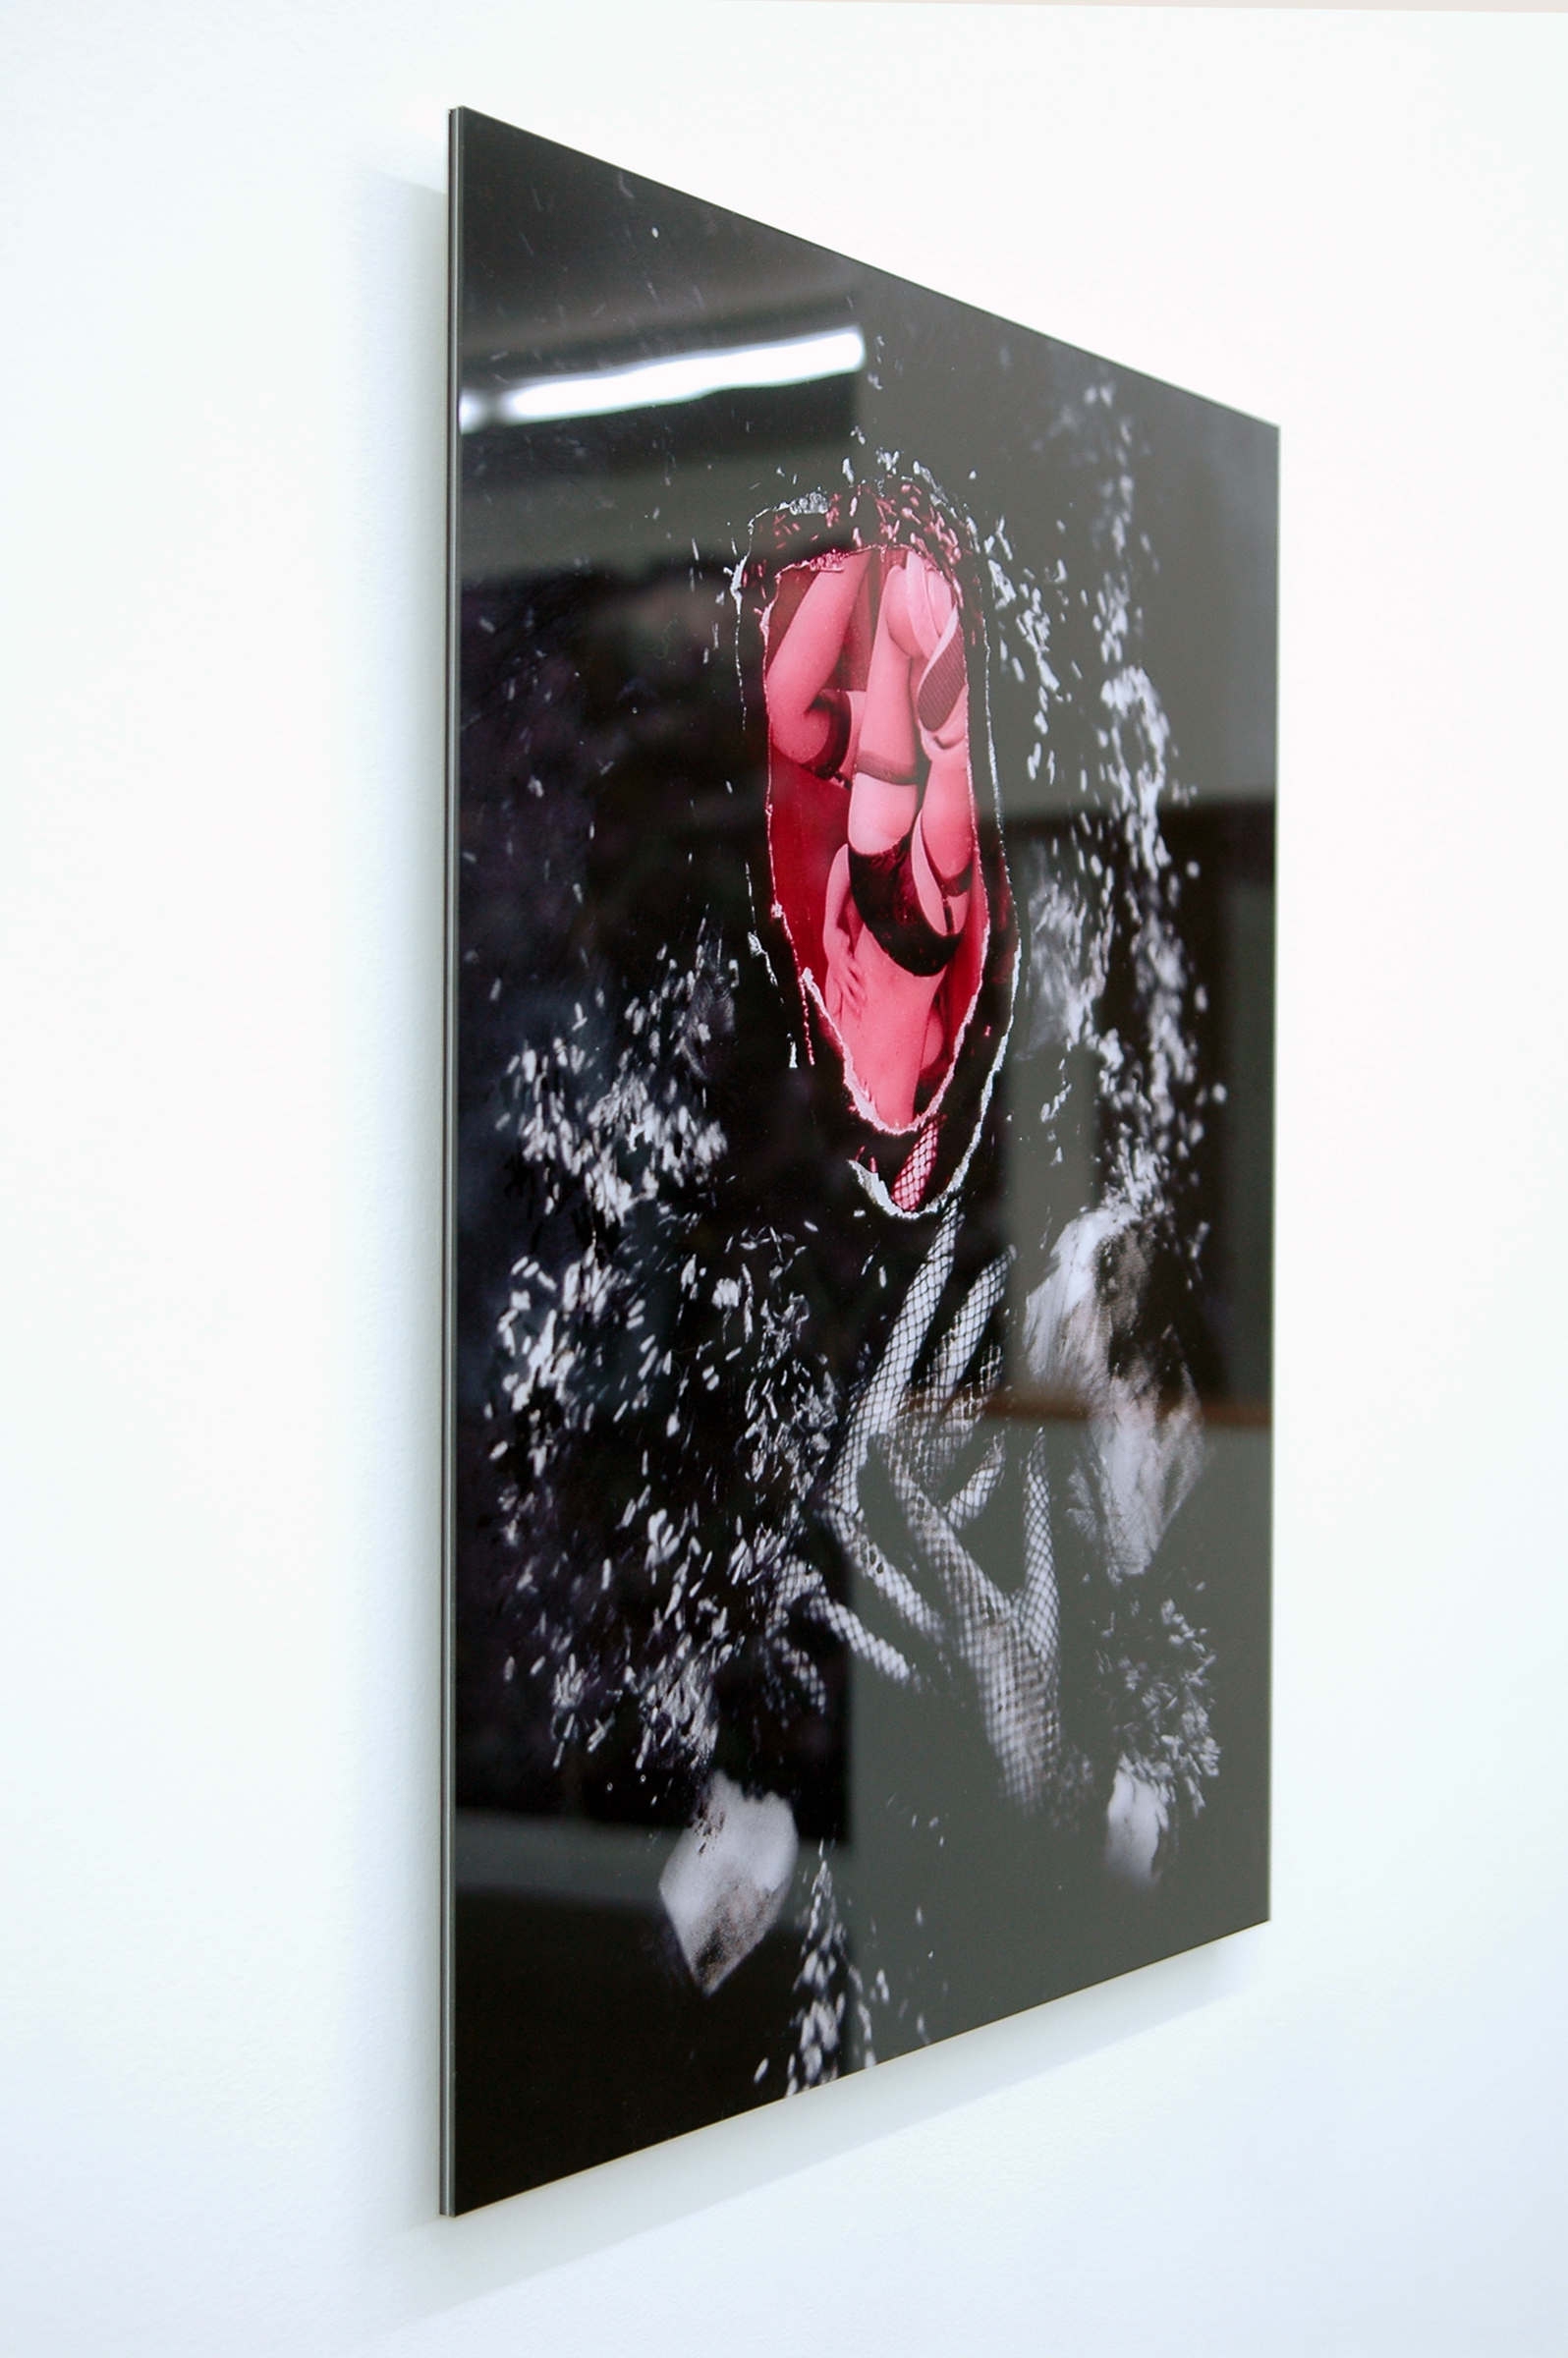   DERIC CARNER  (3/4 view) &nbsp;Here Lies the Heart,&nbsp; mounted c-print, 22" x 18", 2014 